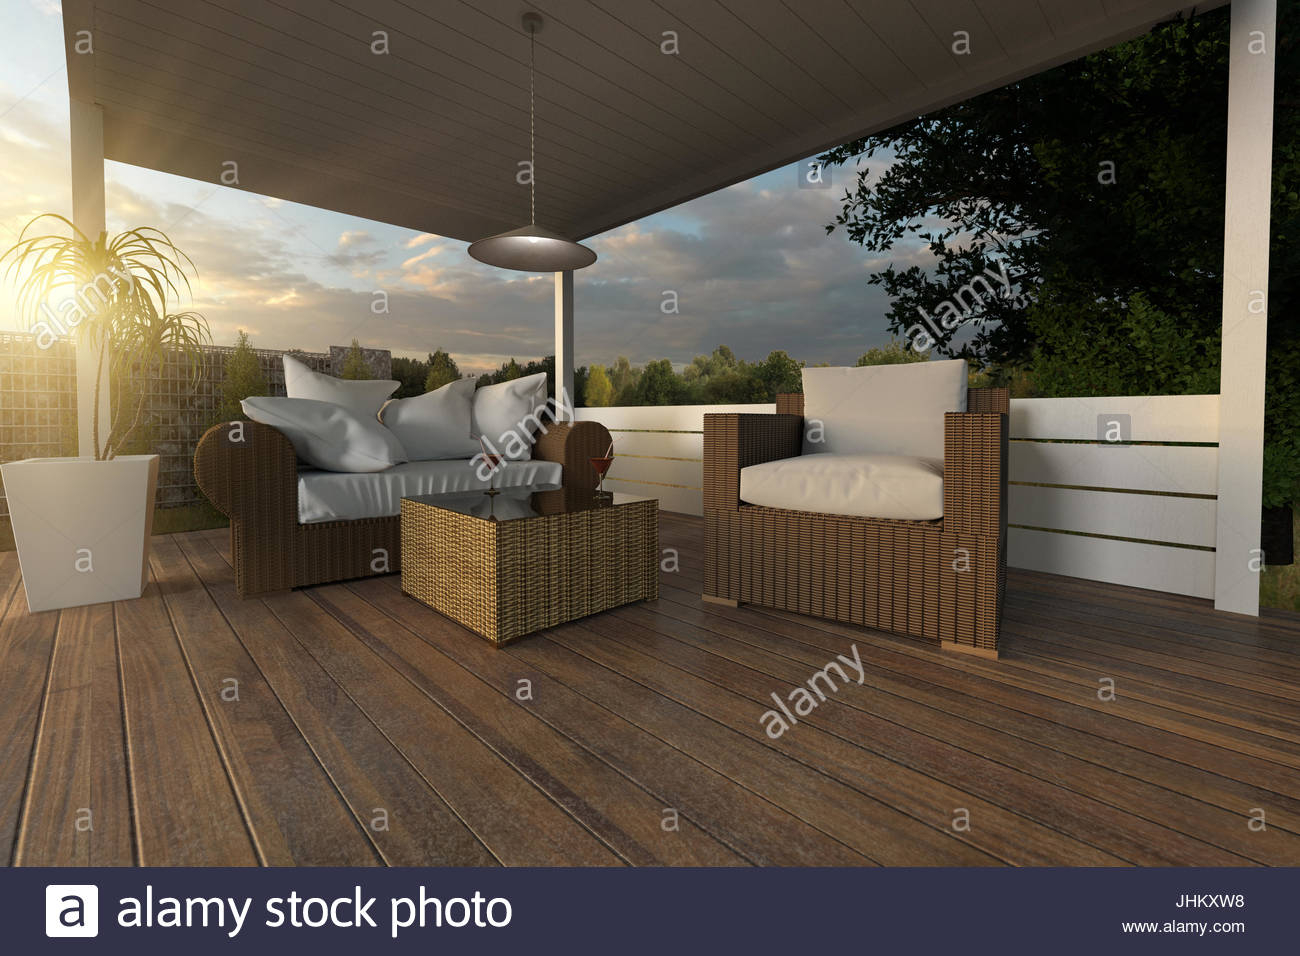 3d Rendering Of Rattan Garden Furniture On Wooden Patio At regarding size 1300 X 956